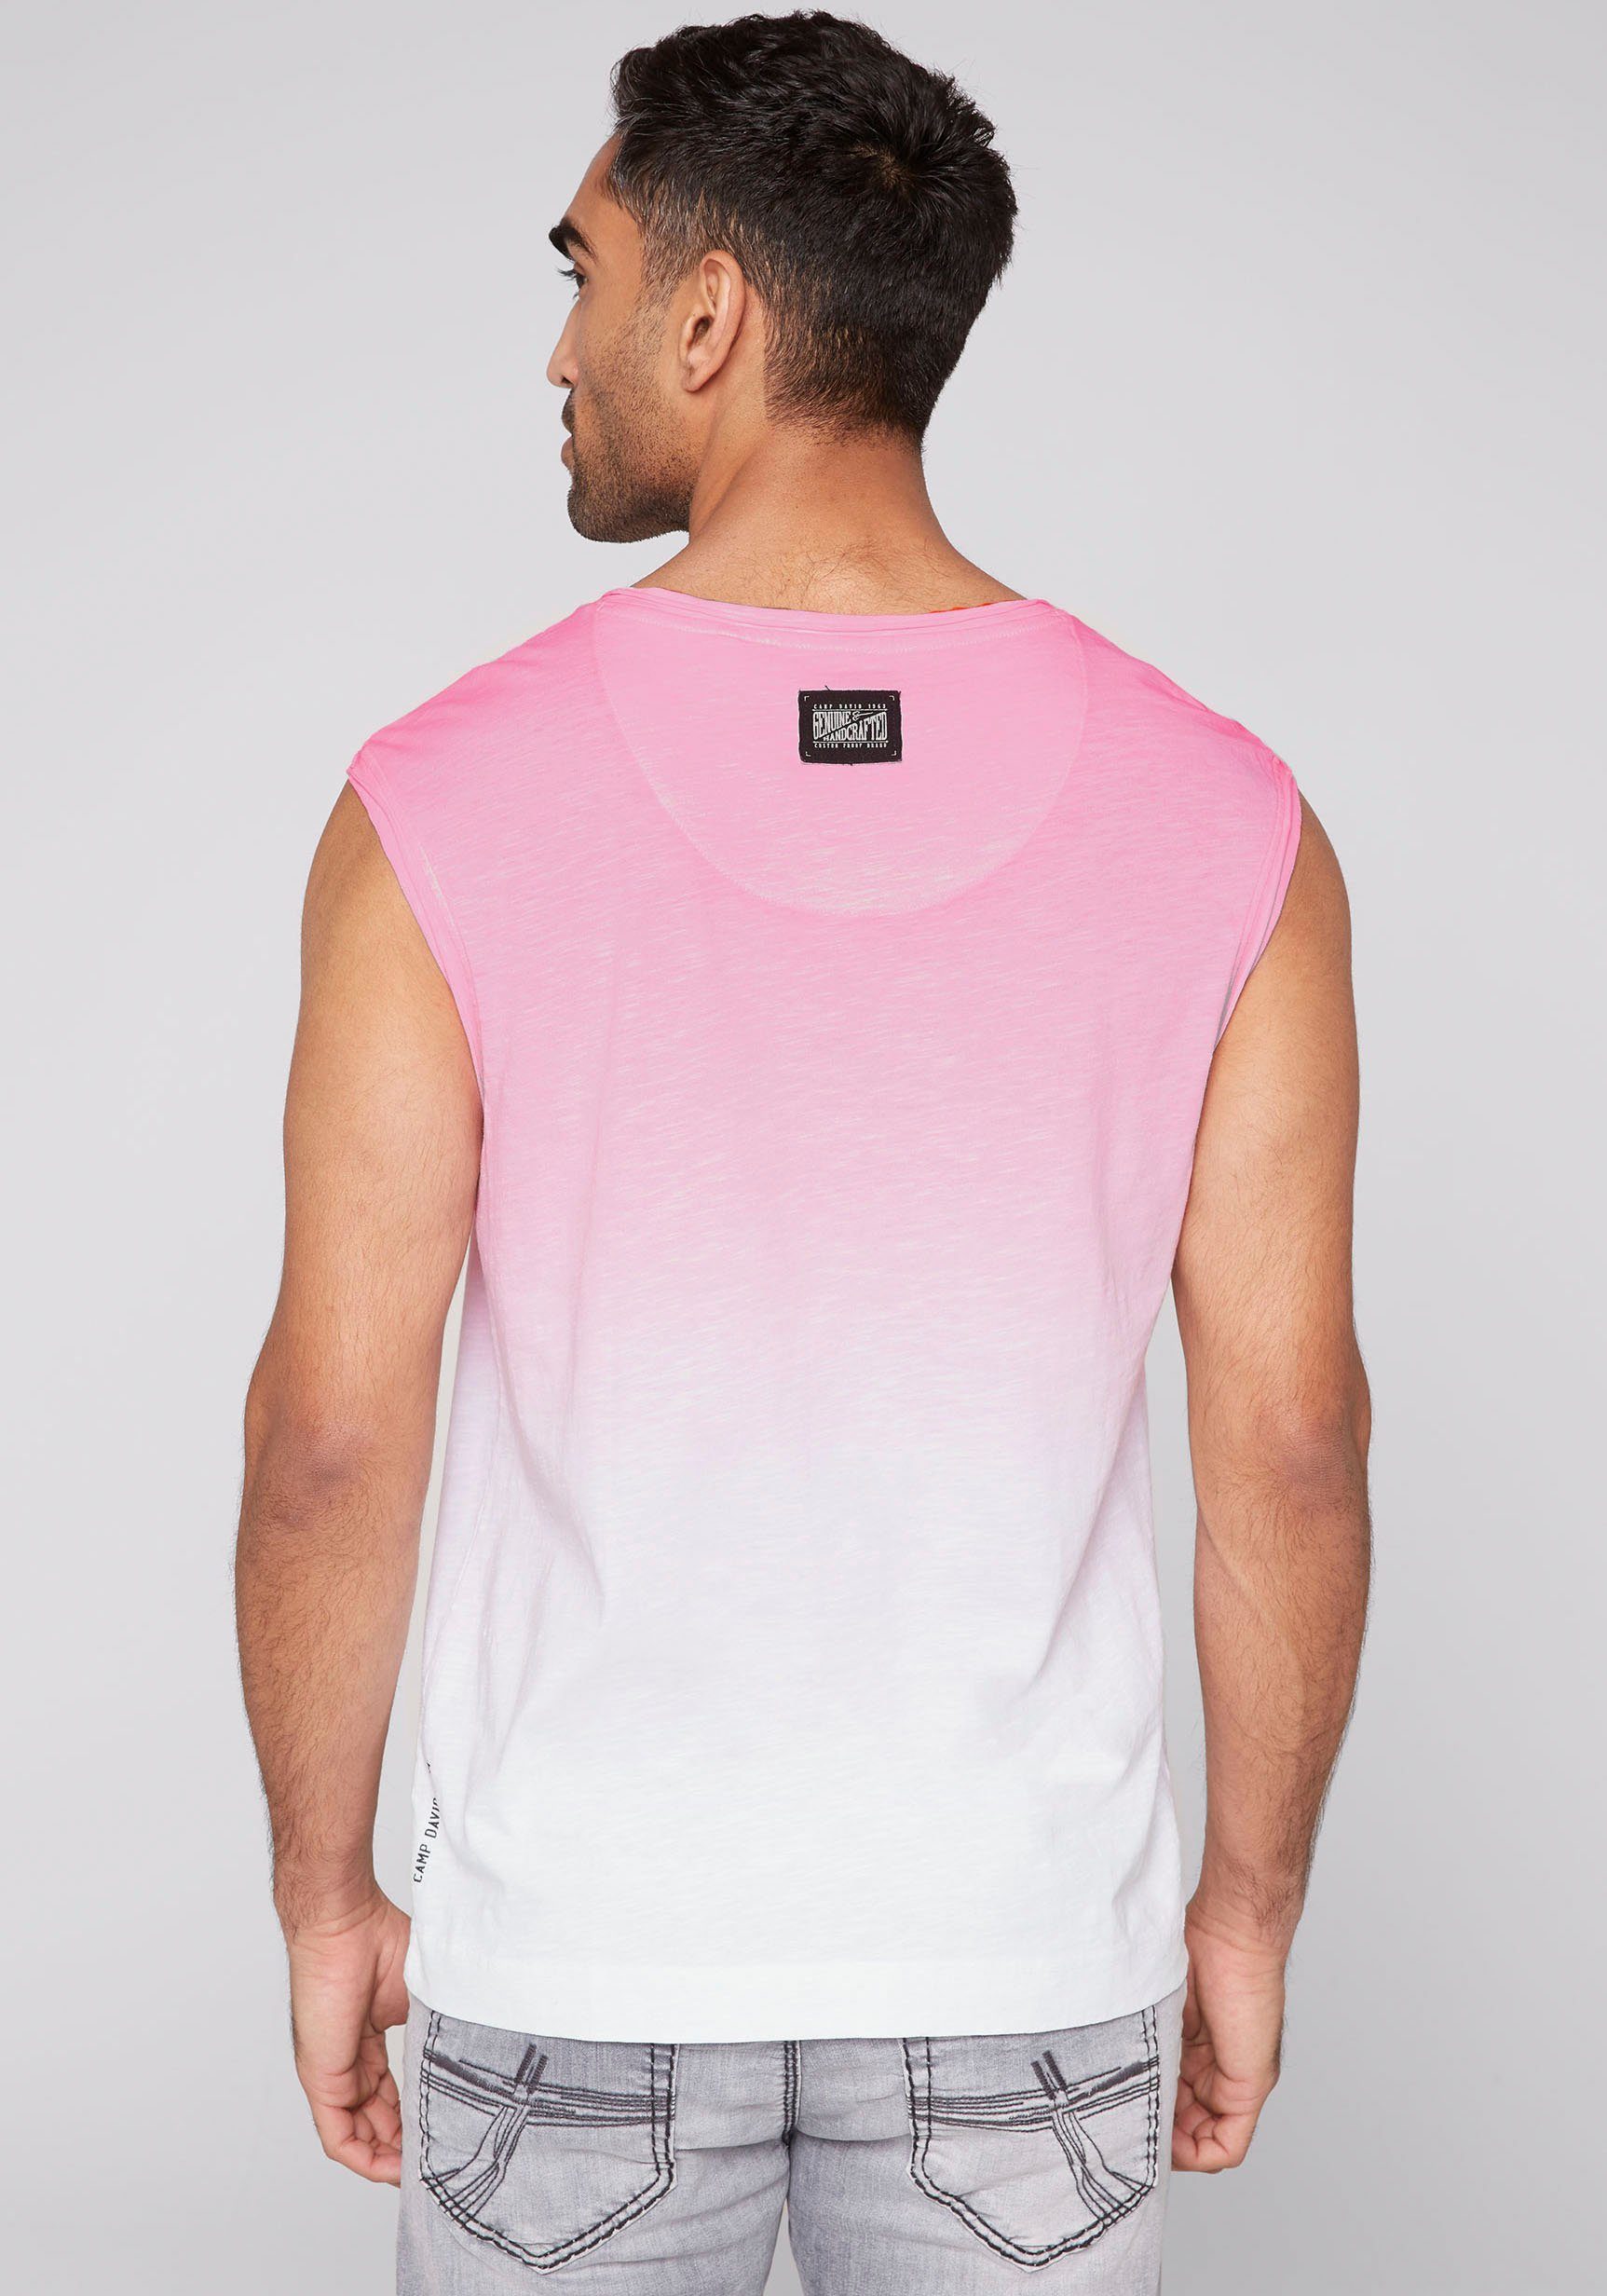 CAMP DAVID / pink V-Shirt neon opticwhite